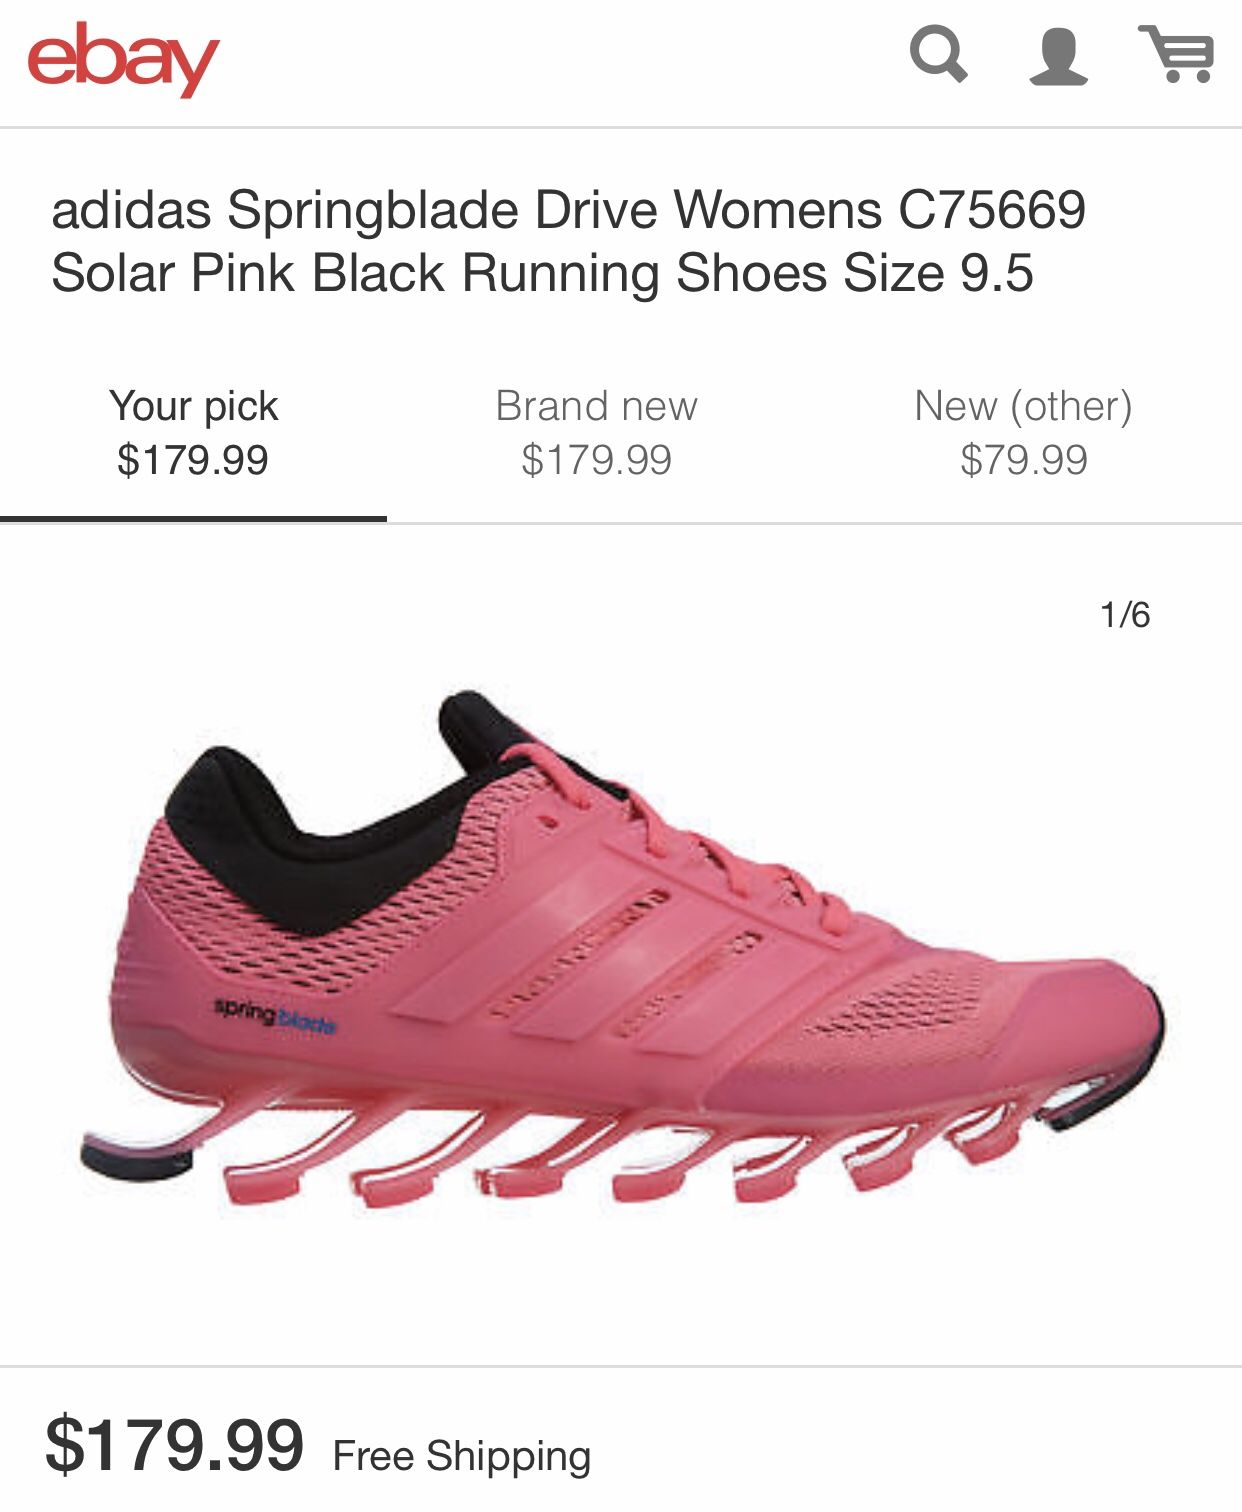 Women’s Adidas Springblade size 9.5